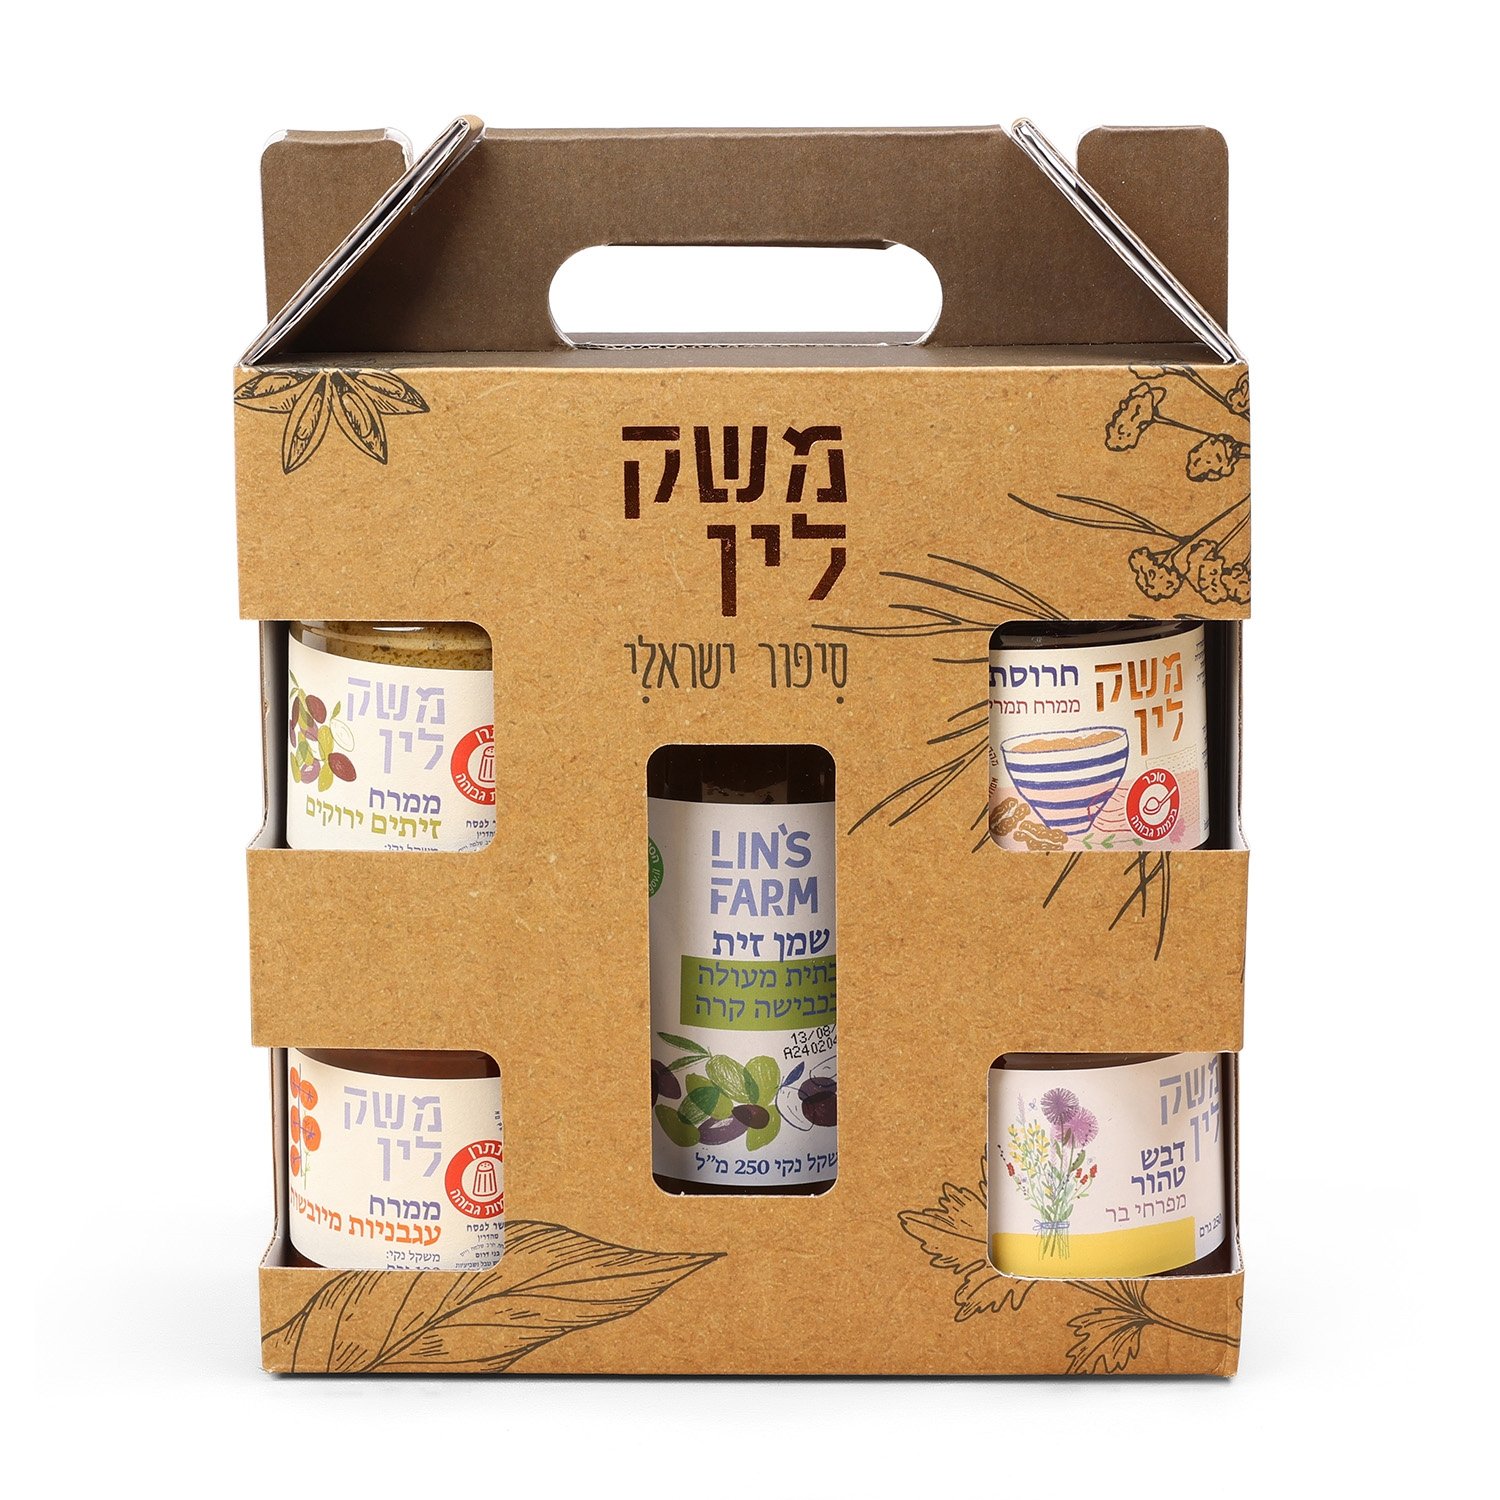 Lin's Farm All-Natural "Israeli Tastes" Gift Basket - 1